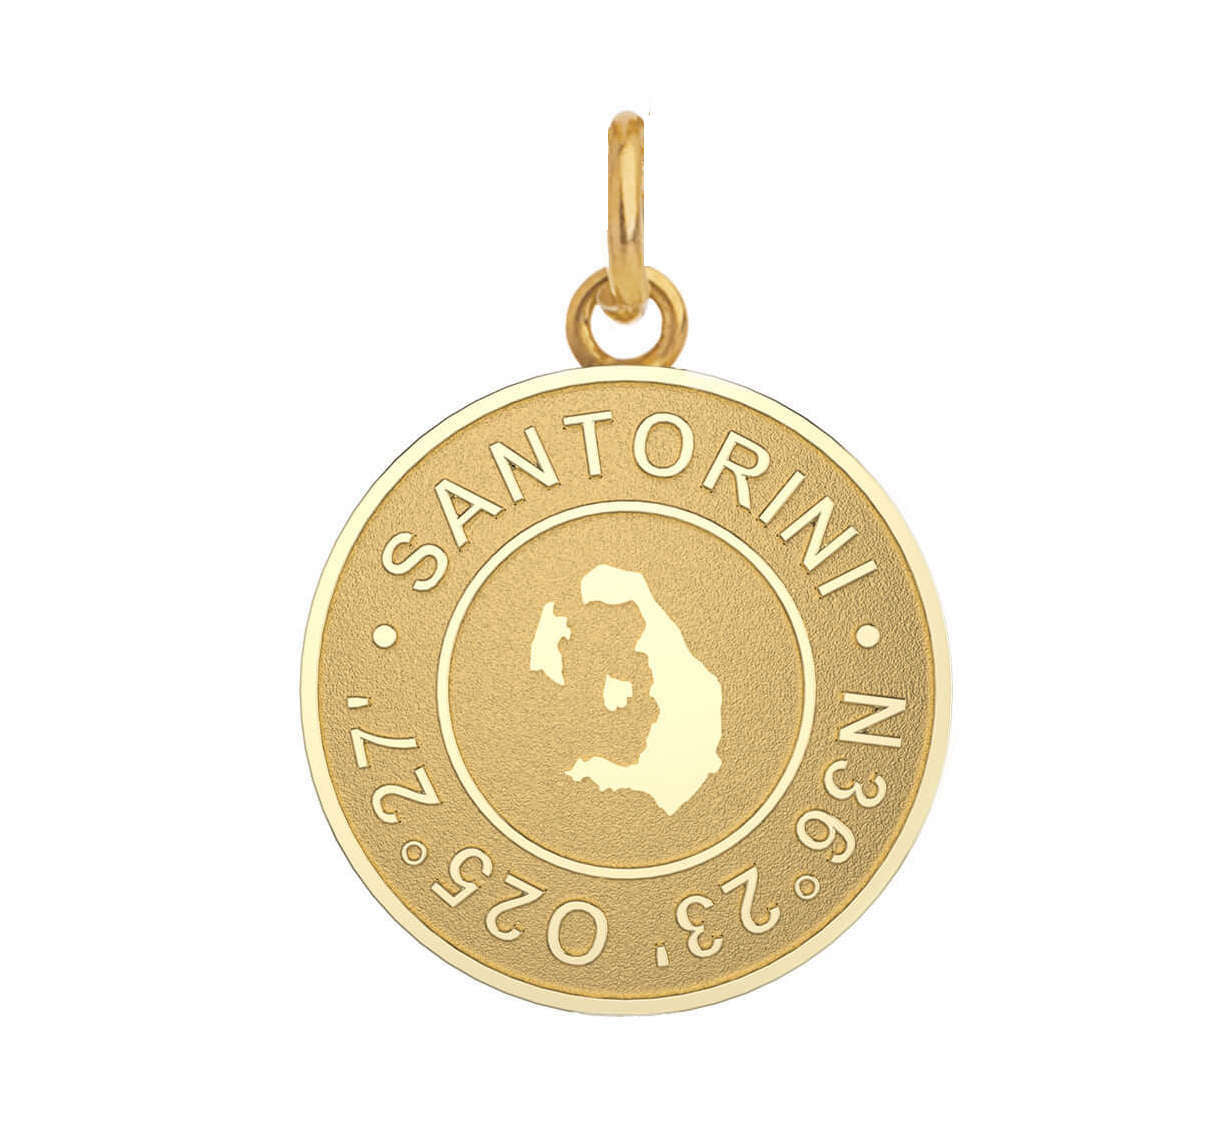 Goldmünzenanhänger „Santorini“.